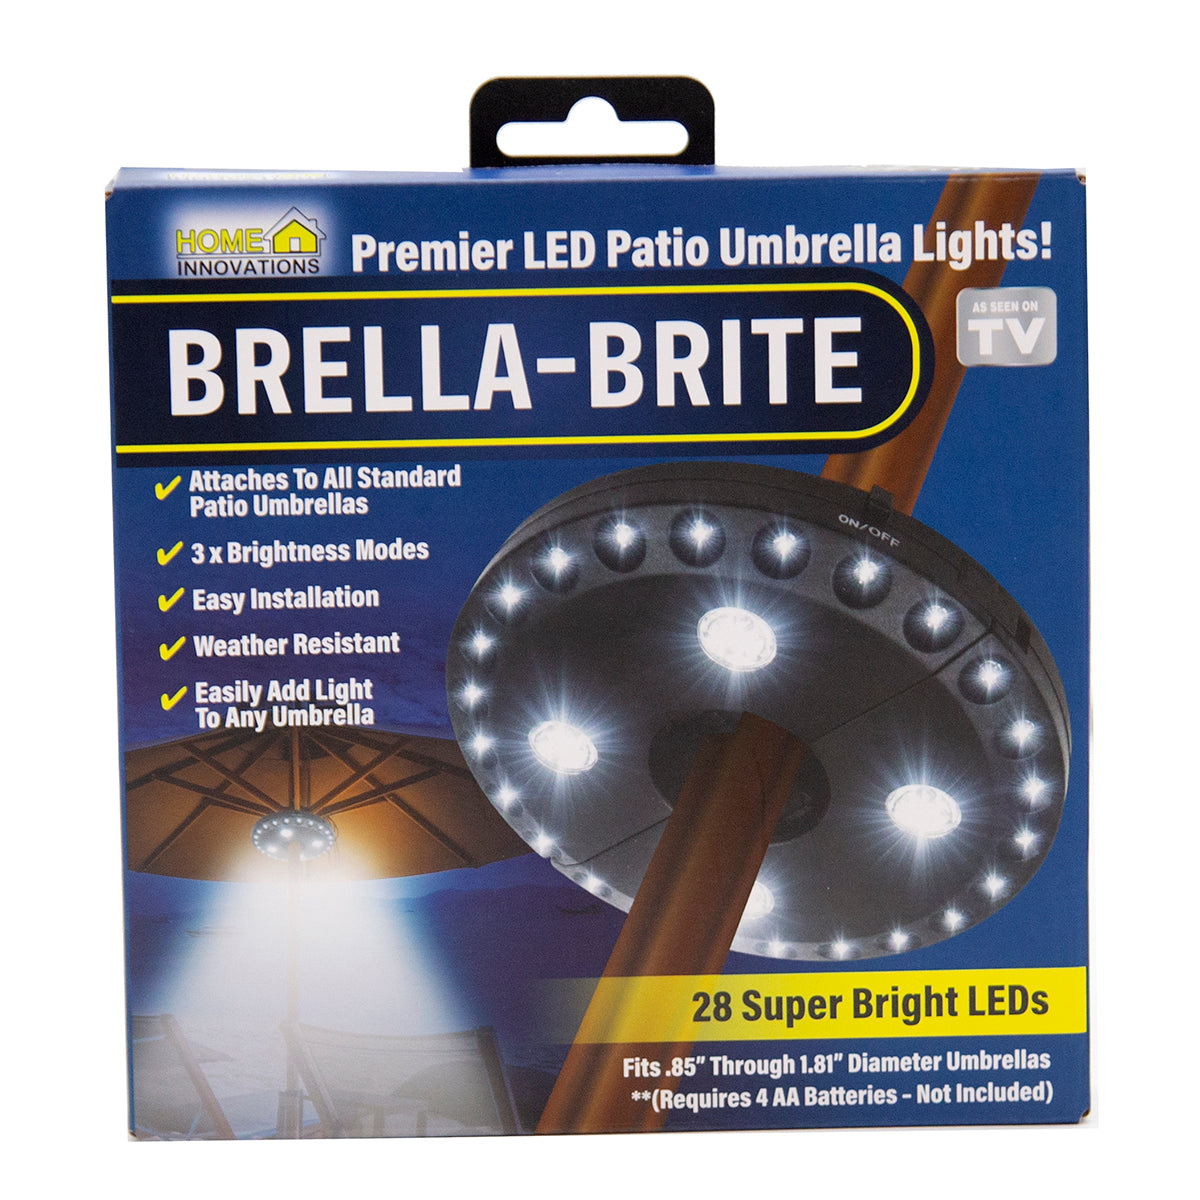 Home Innovations Brella-Brite LED Umbrella Light